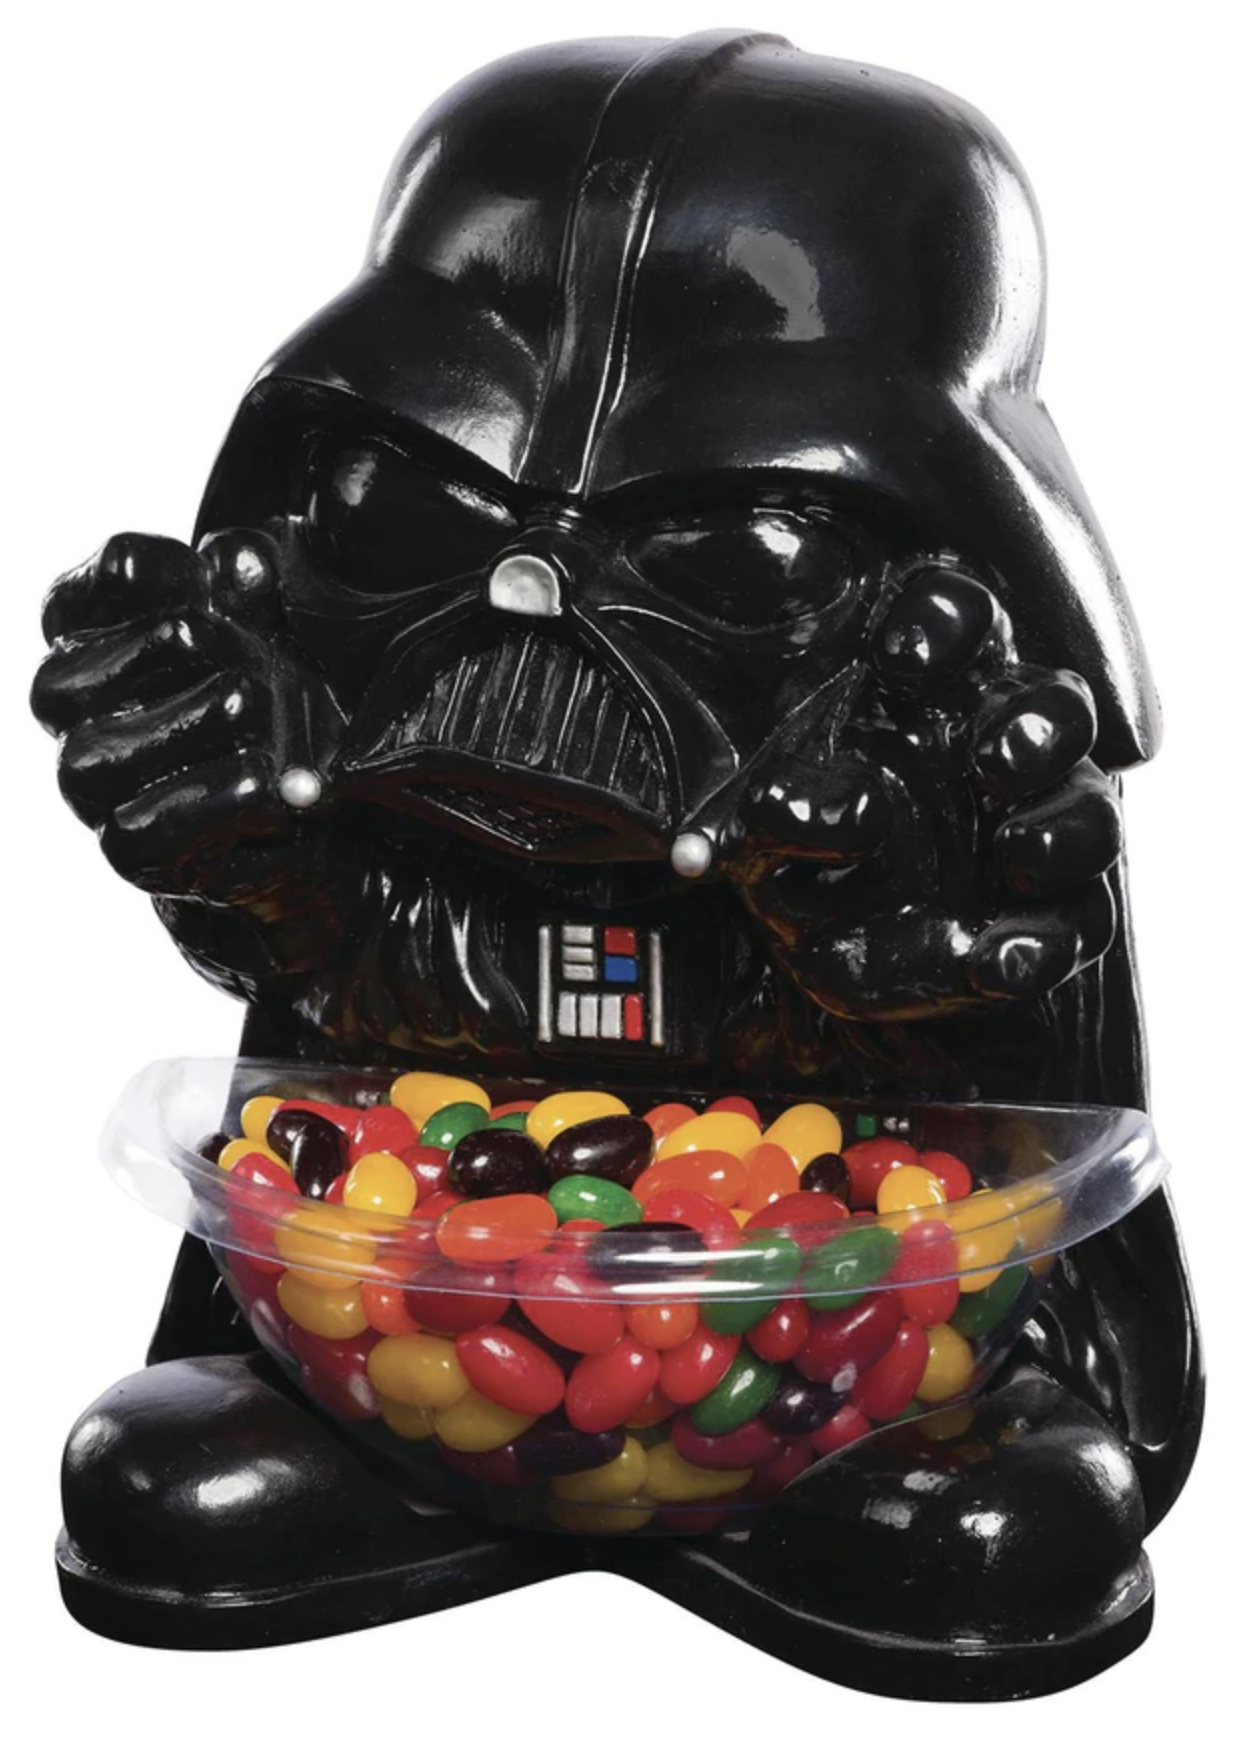 Darth Vader Candy Bowl 38cm